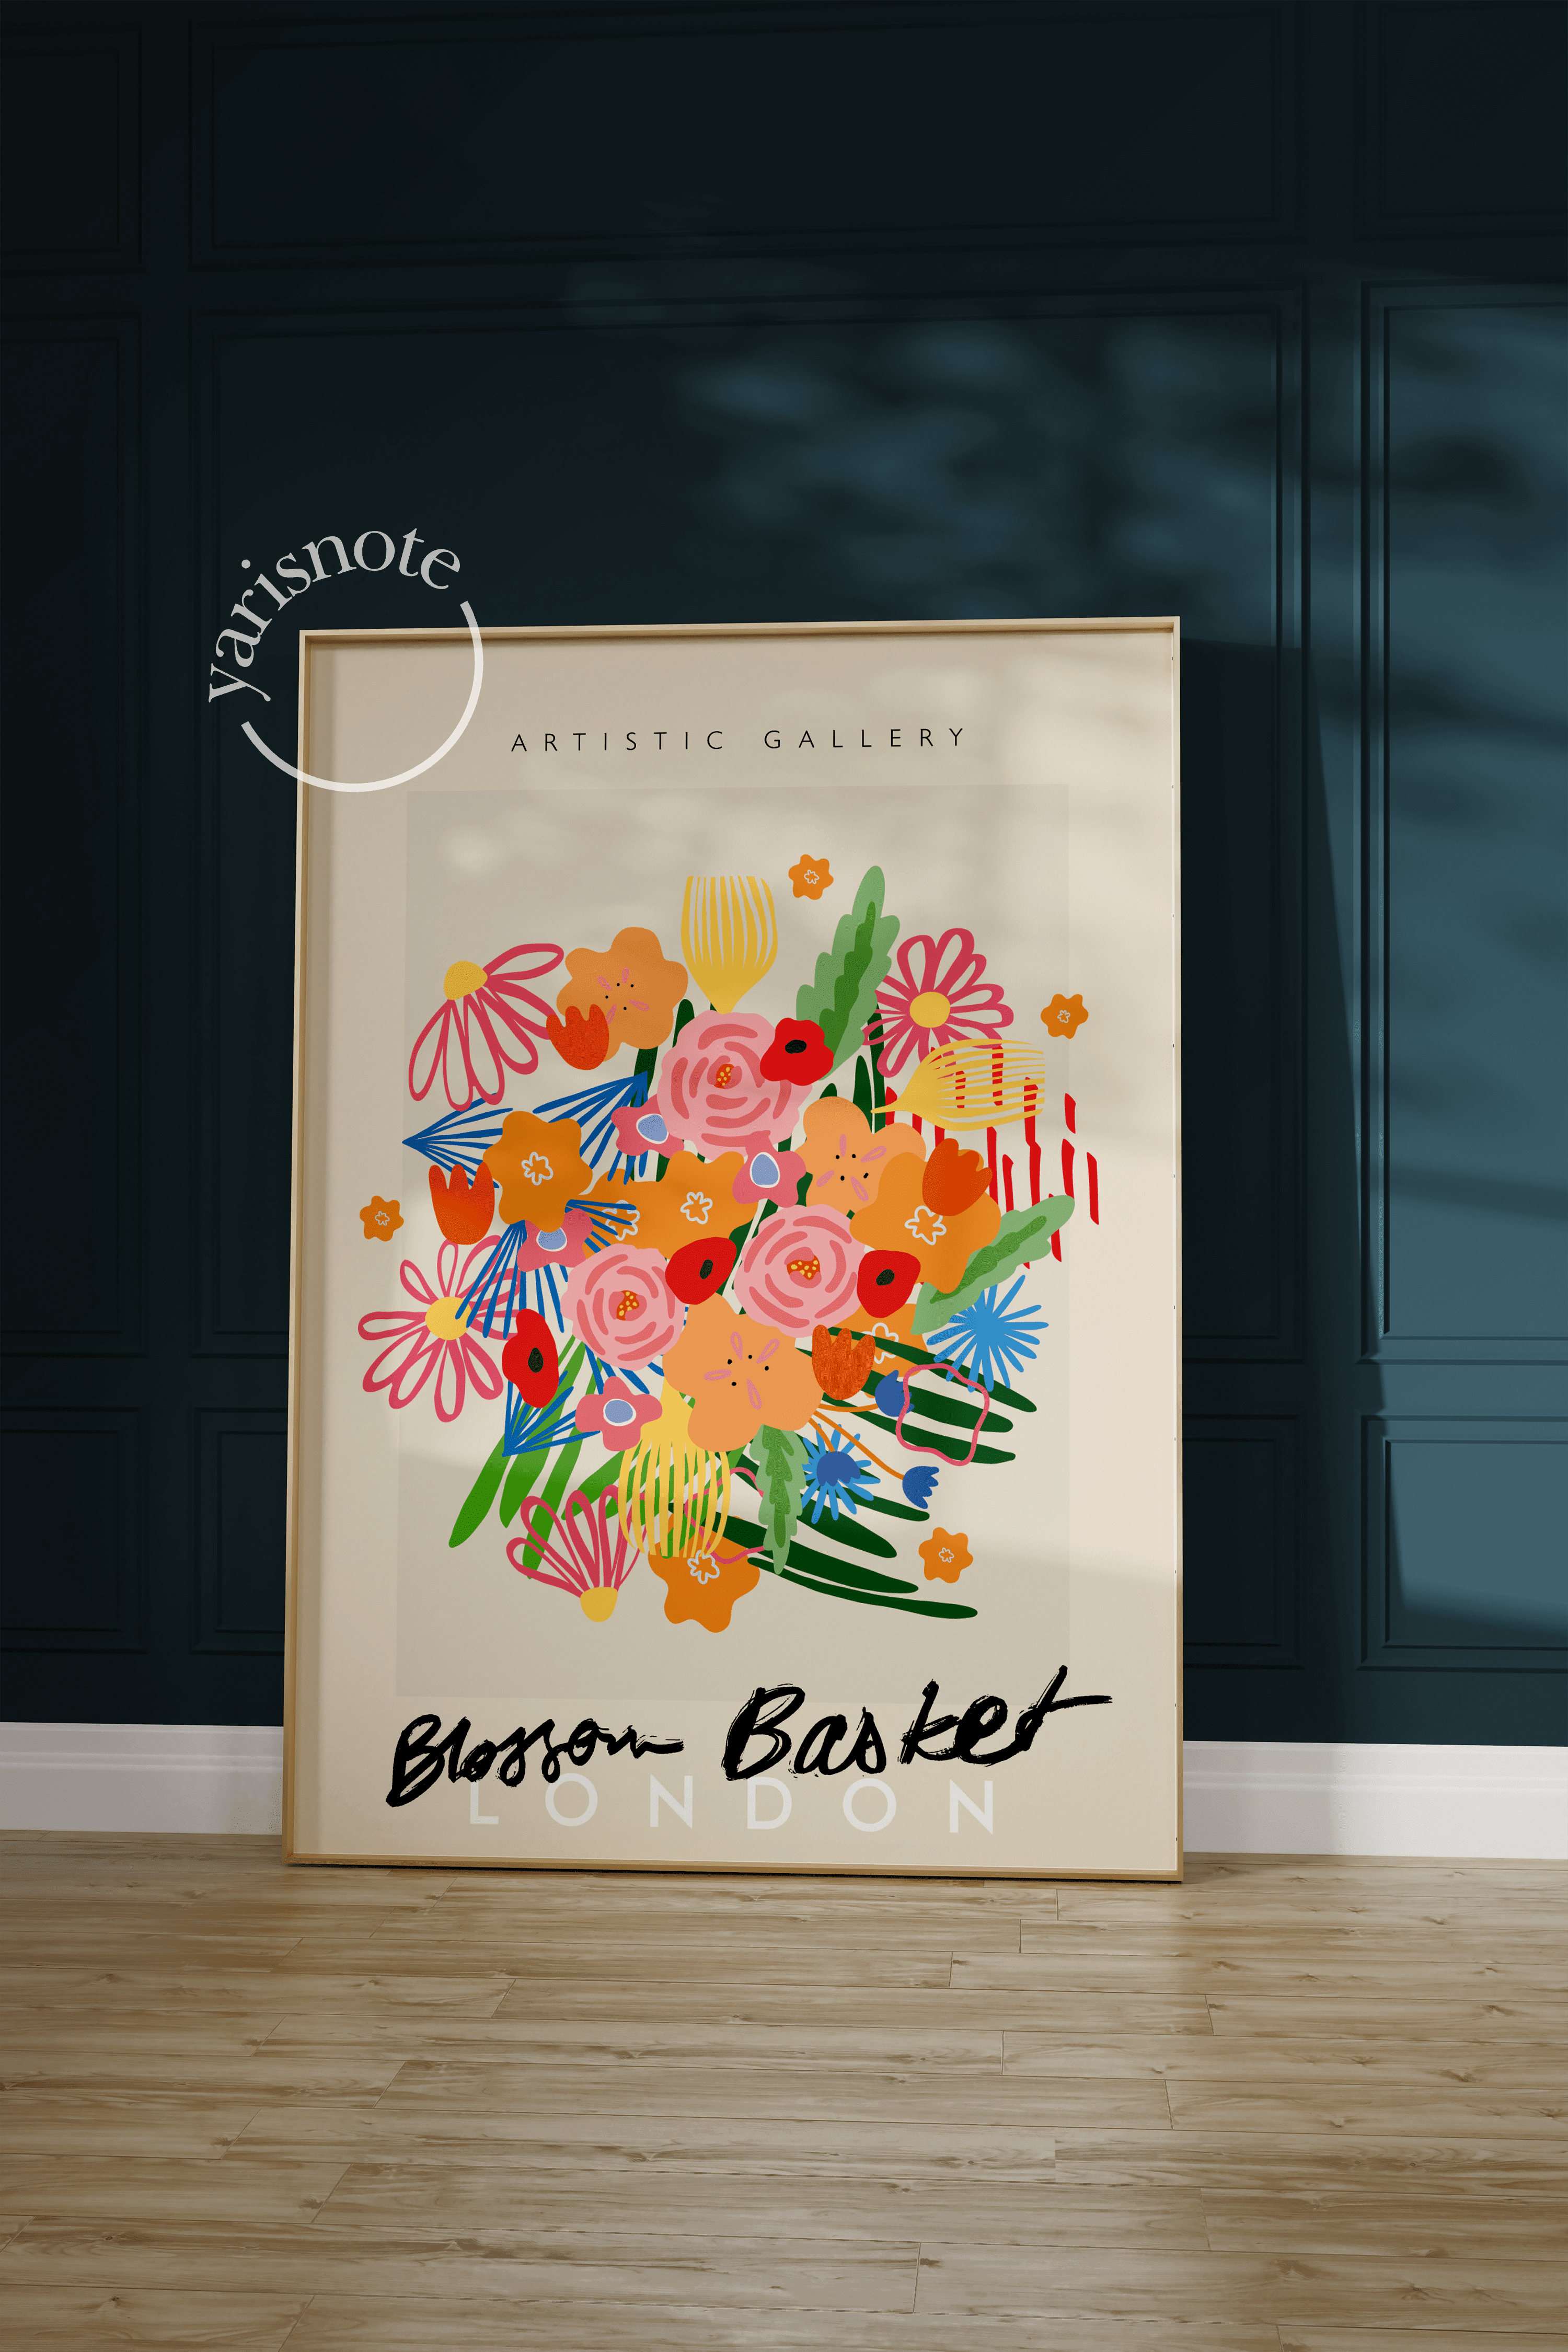 Blossom Basket London Çerçevesiz Poster